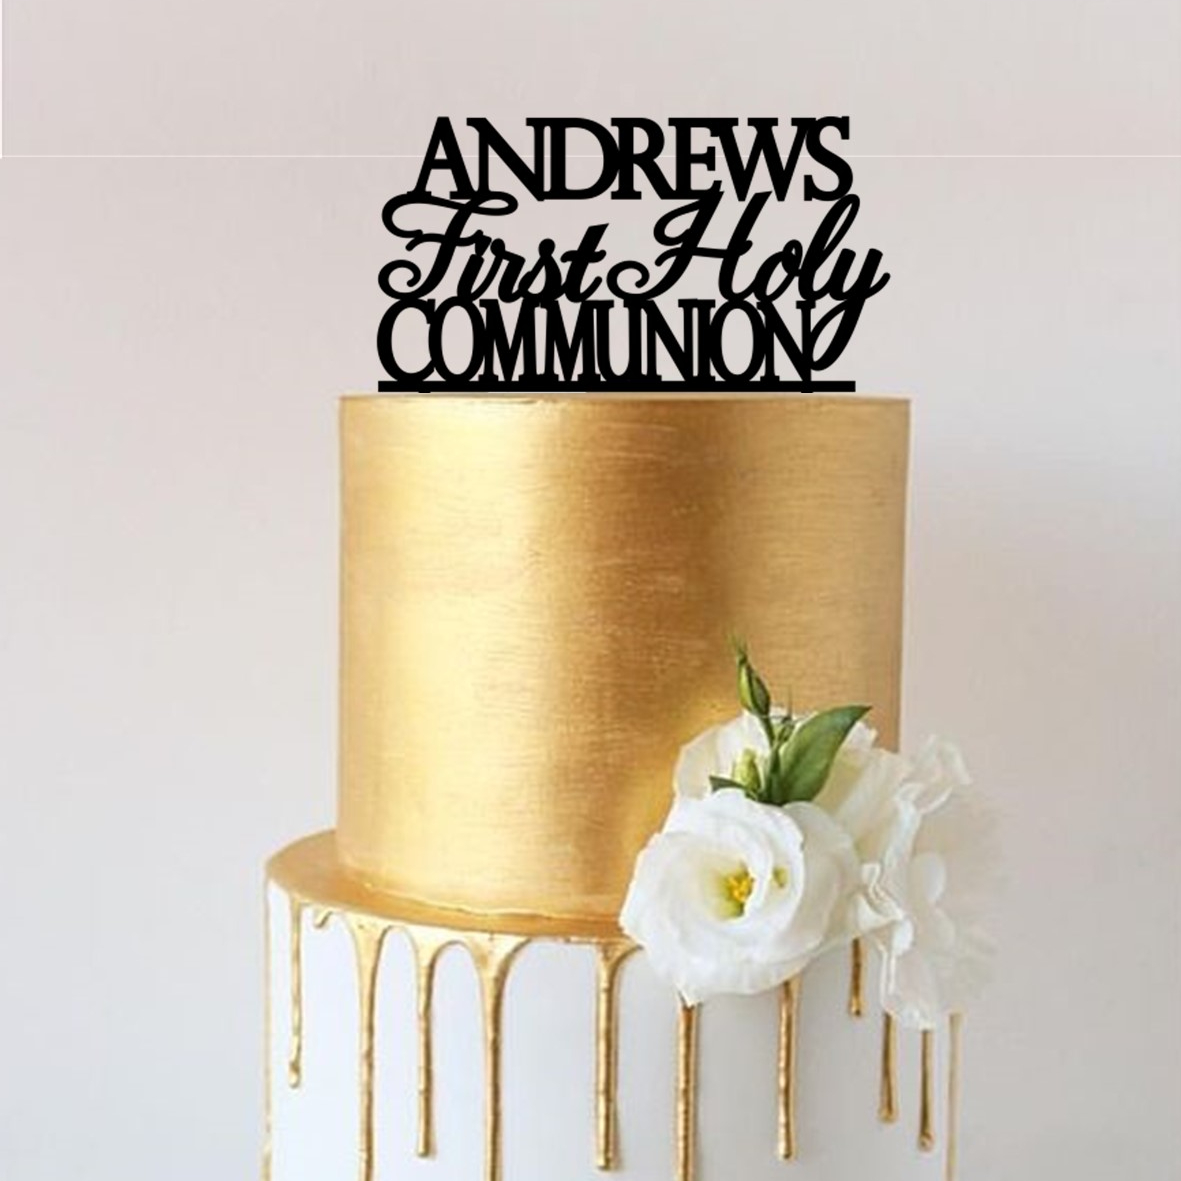 First holy communion cake  Nishas Fresh Bakes  Facebook